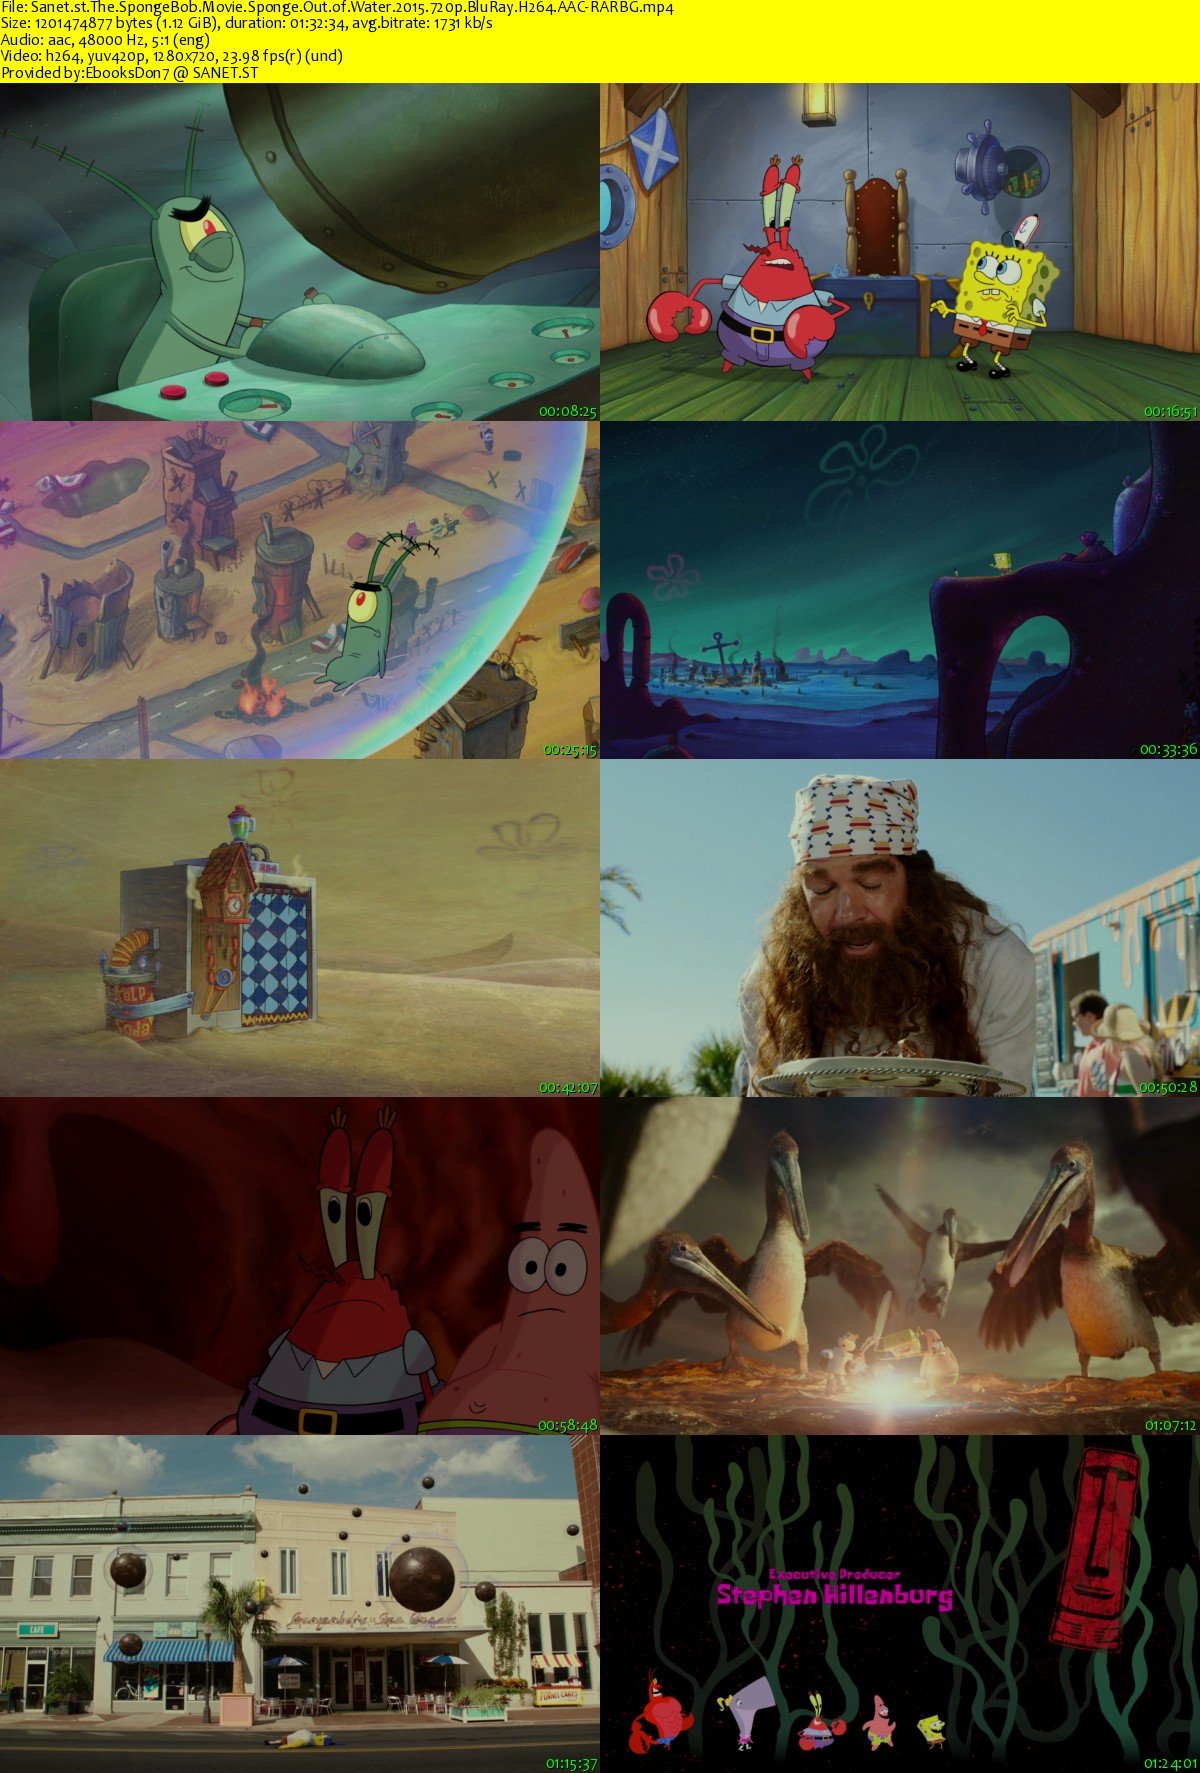 The SpongeBob Movie Sponge Out of Water 2015 720p BluRay H264 AAC-RARBG.